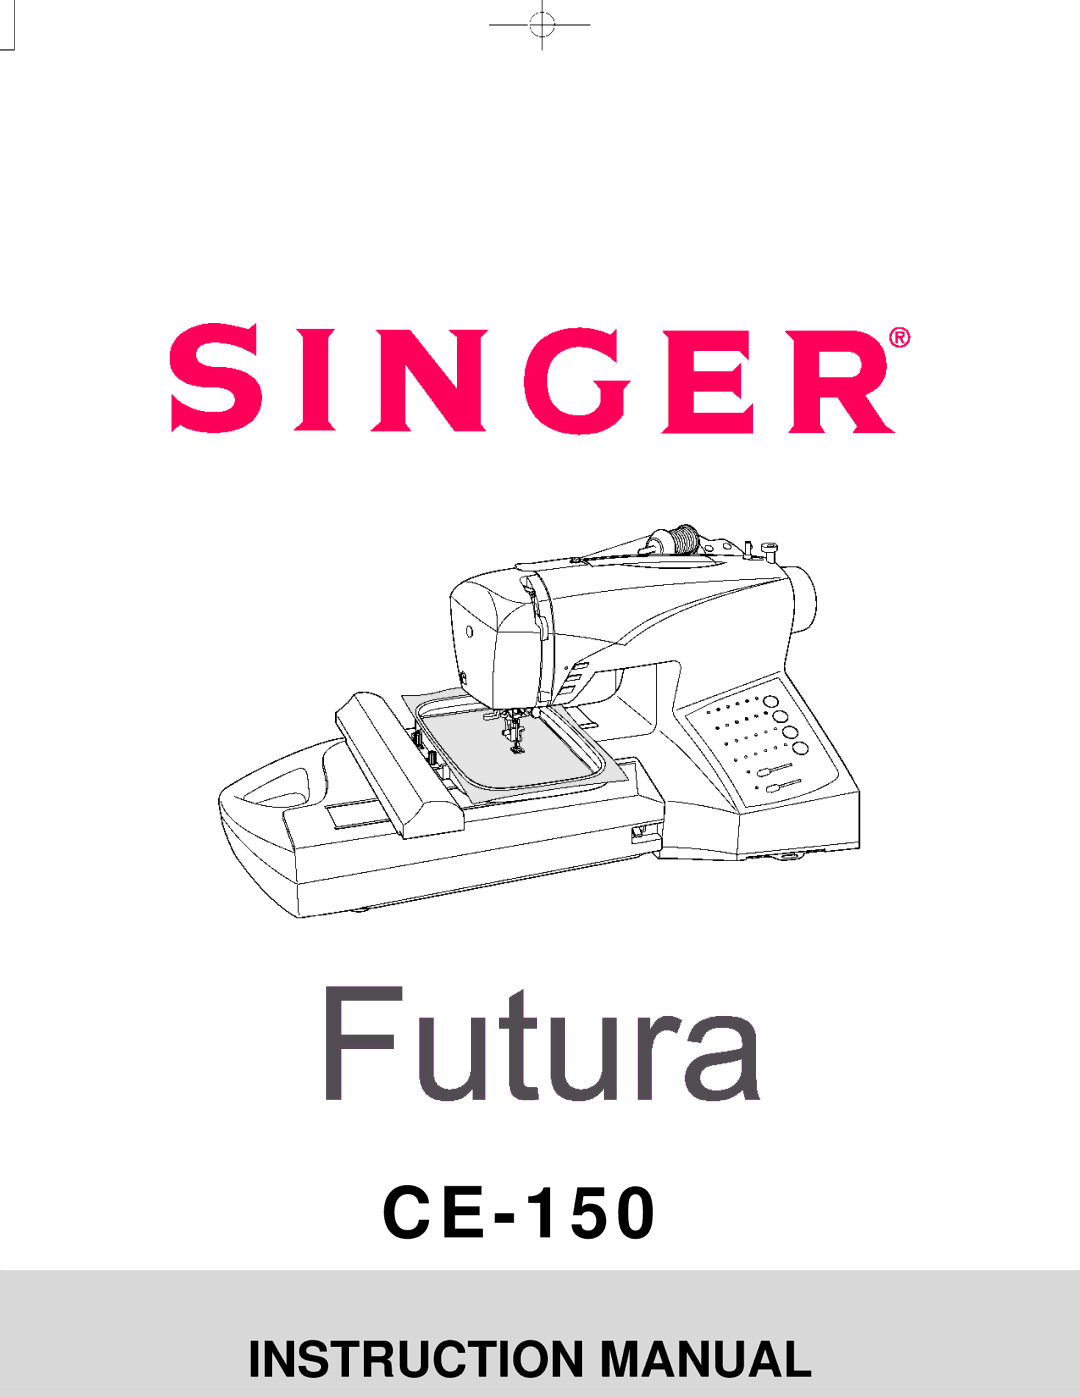 Singer CE-150 instruction manual 